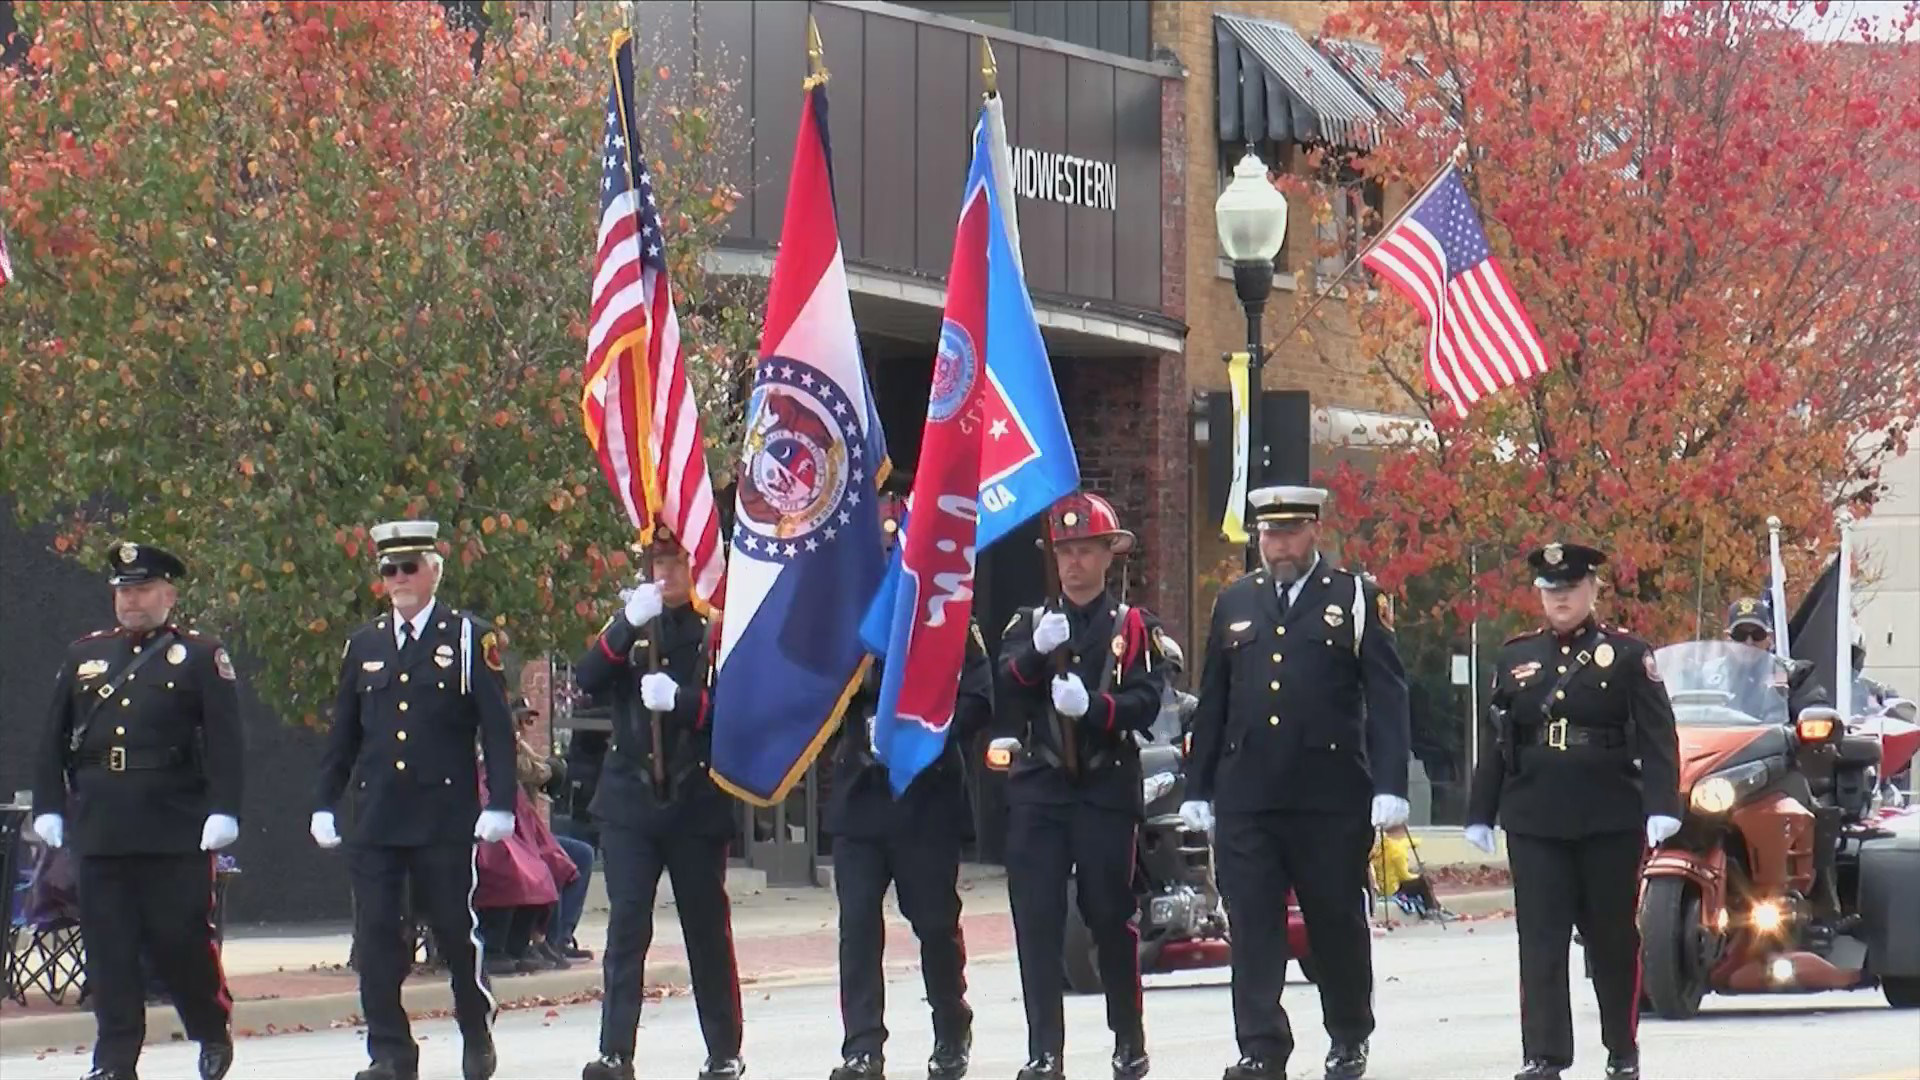 36th Annual Joplin Veterans Day Parade